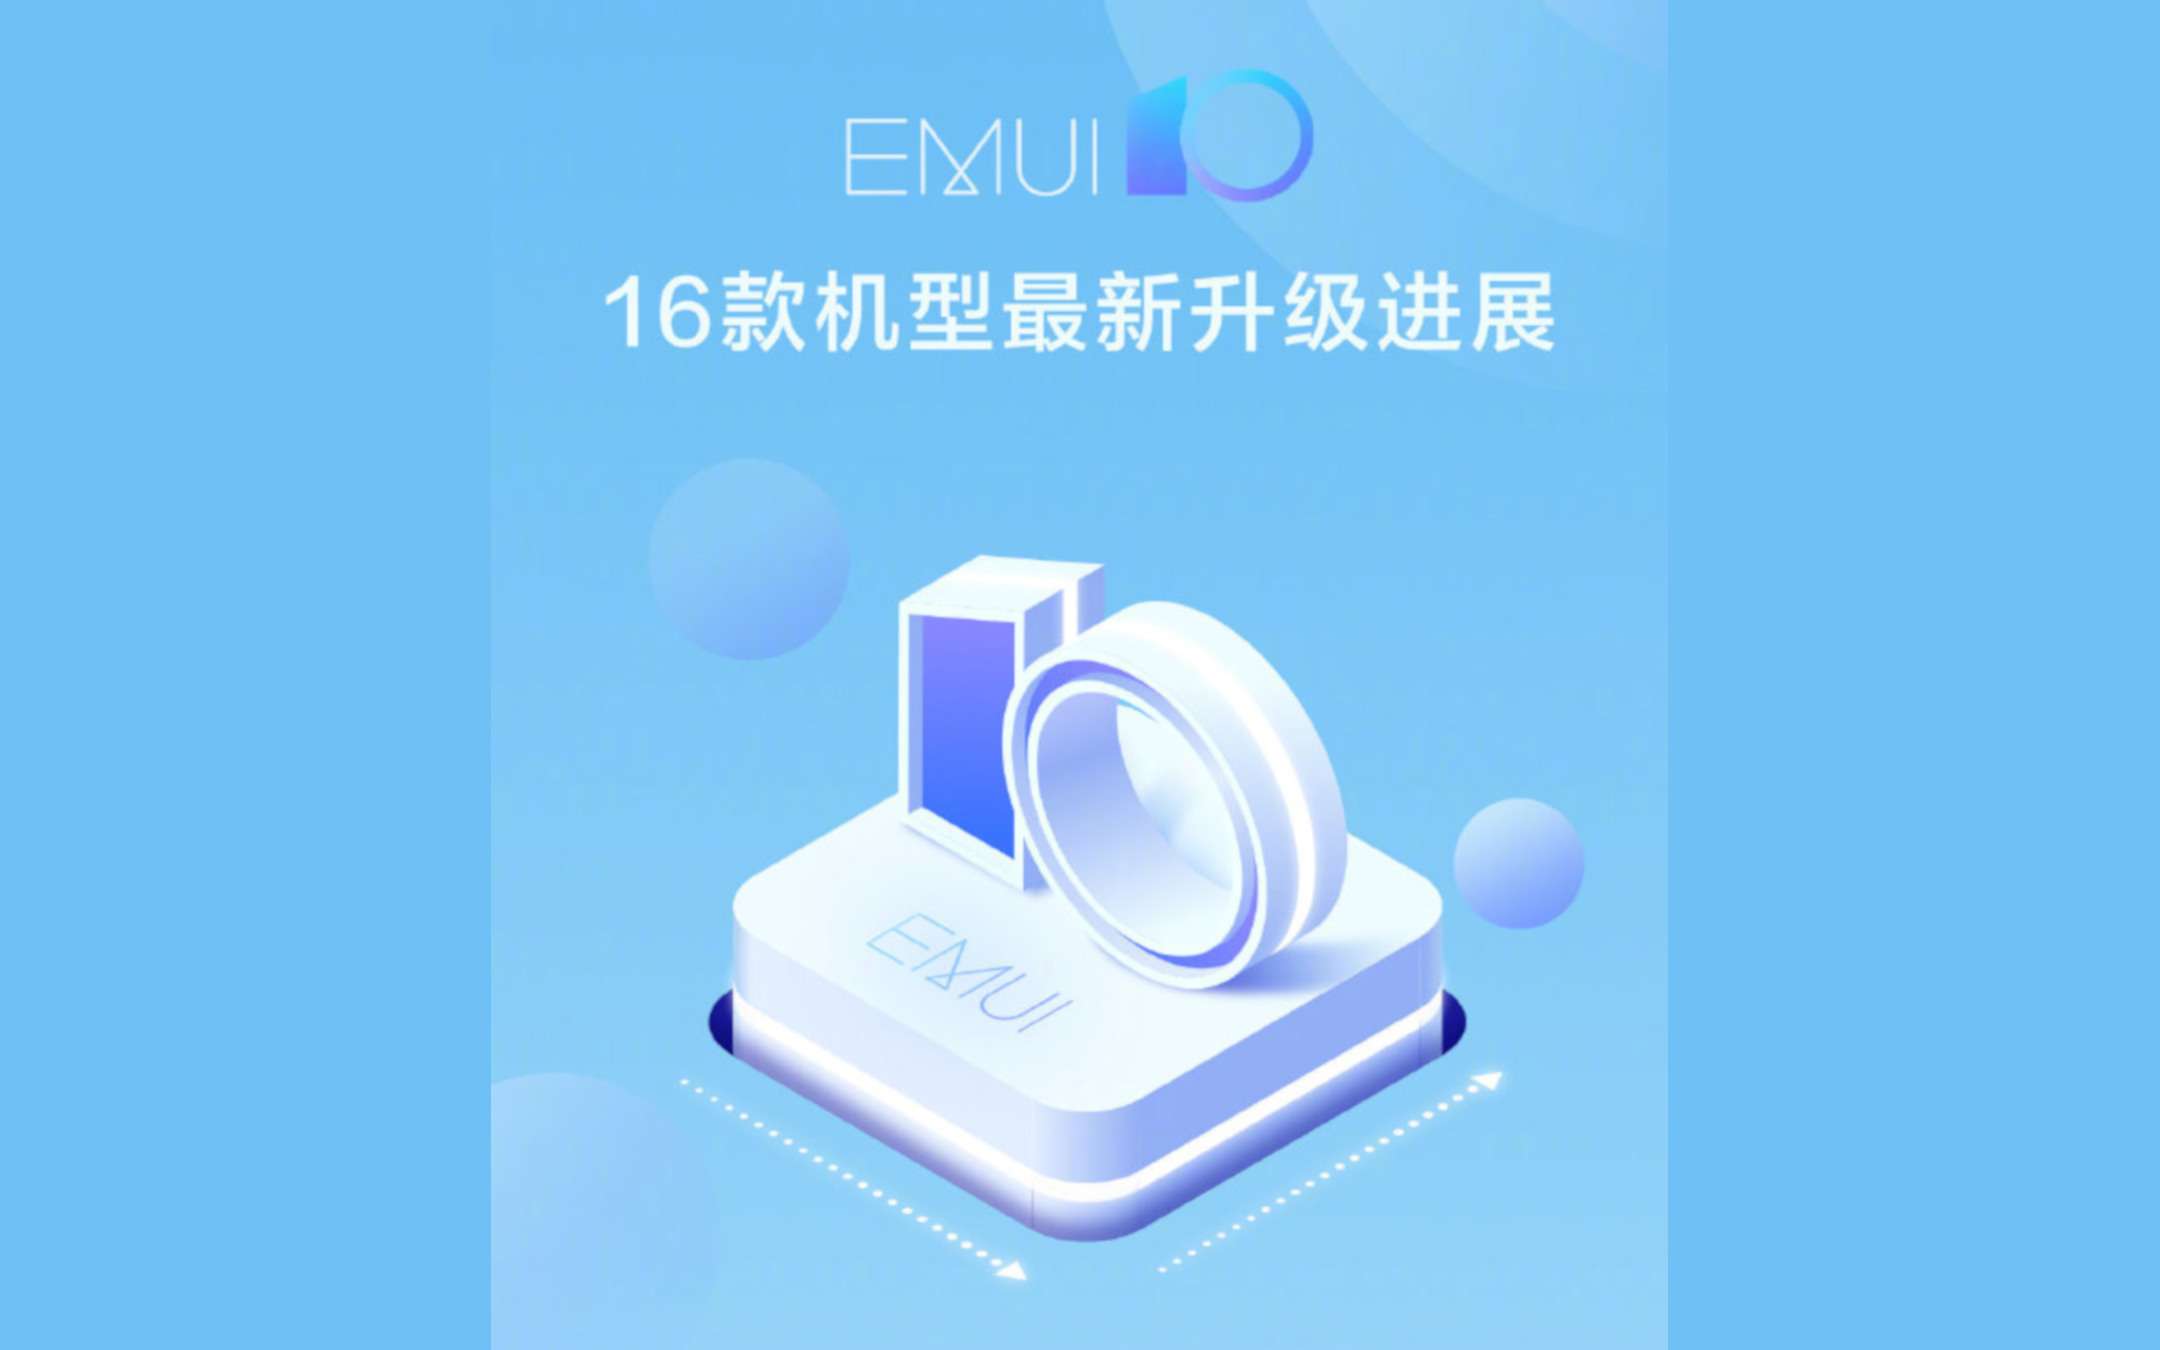 EMUI 10 stabile per 16 telefoni Huawei e Honor